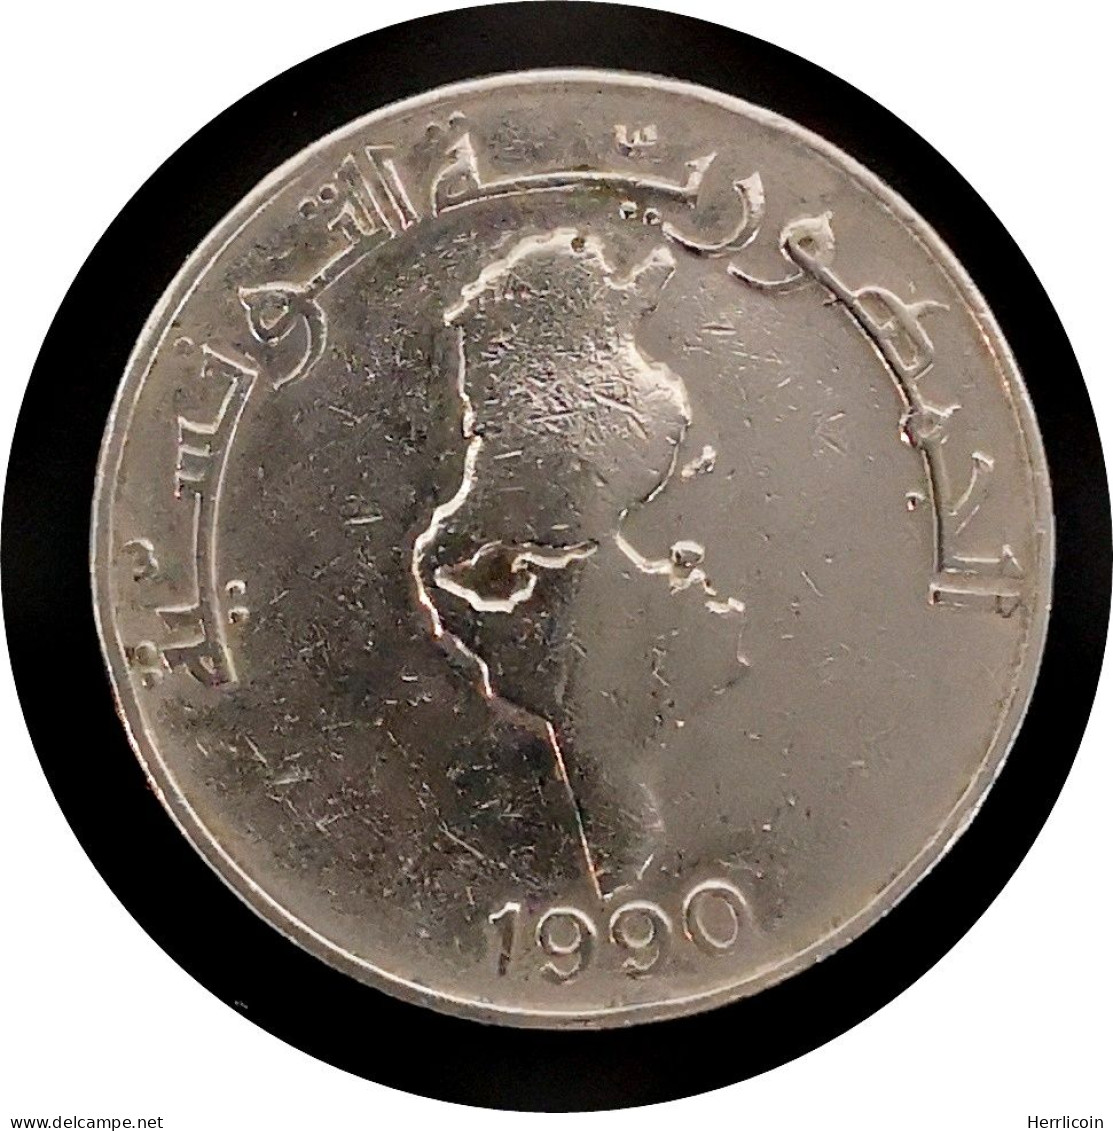 Monnaie Tunisie - 1990 - 1 Dinar FAO Carte - Tunisia